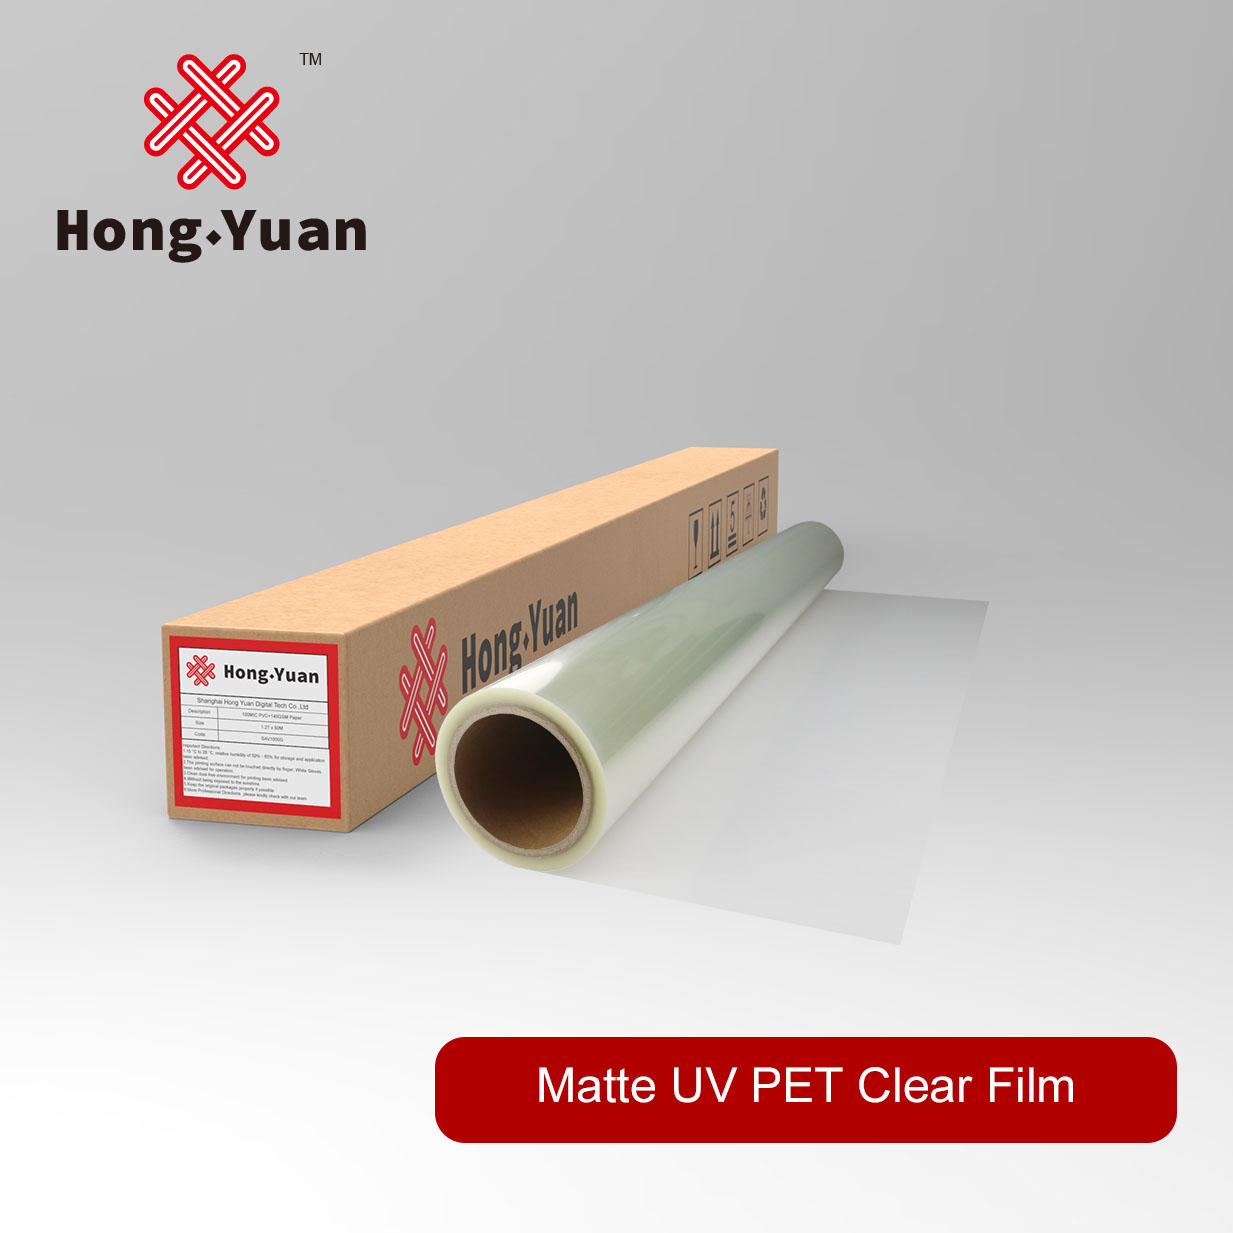 Matte UV PET Clear Film UTF300M